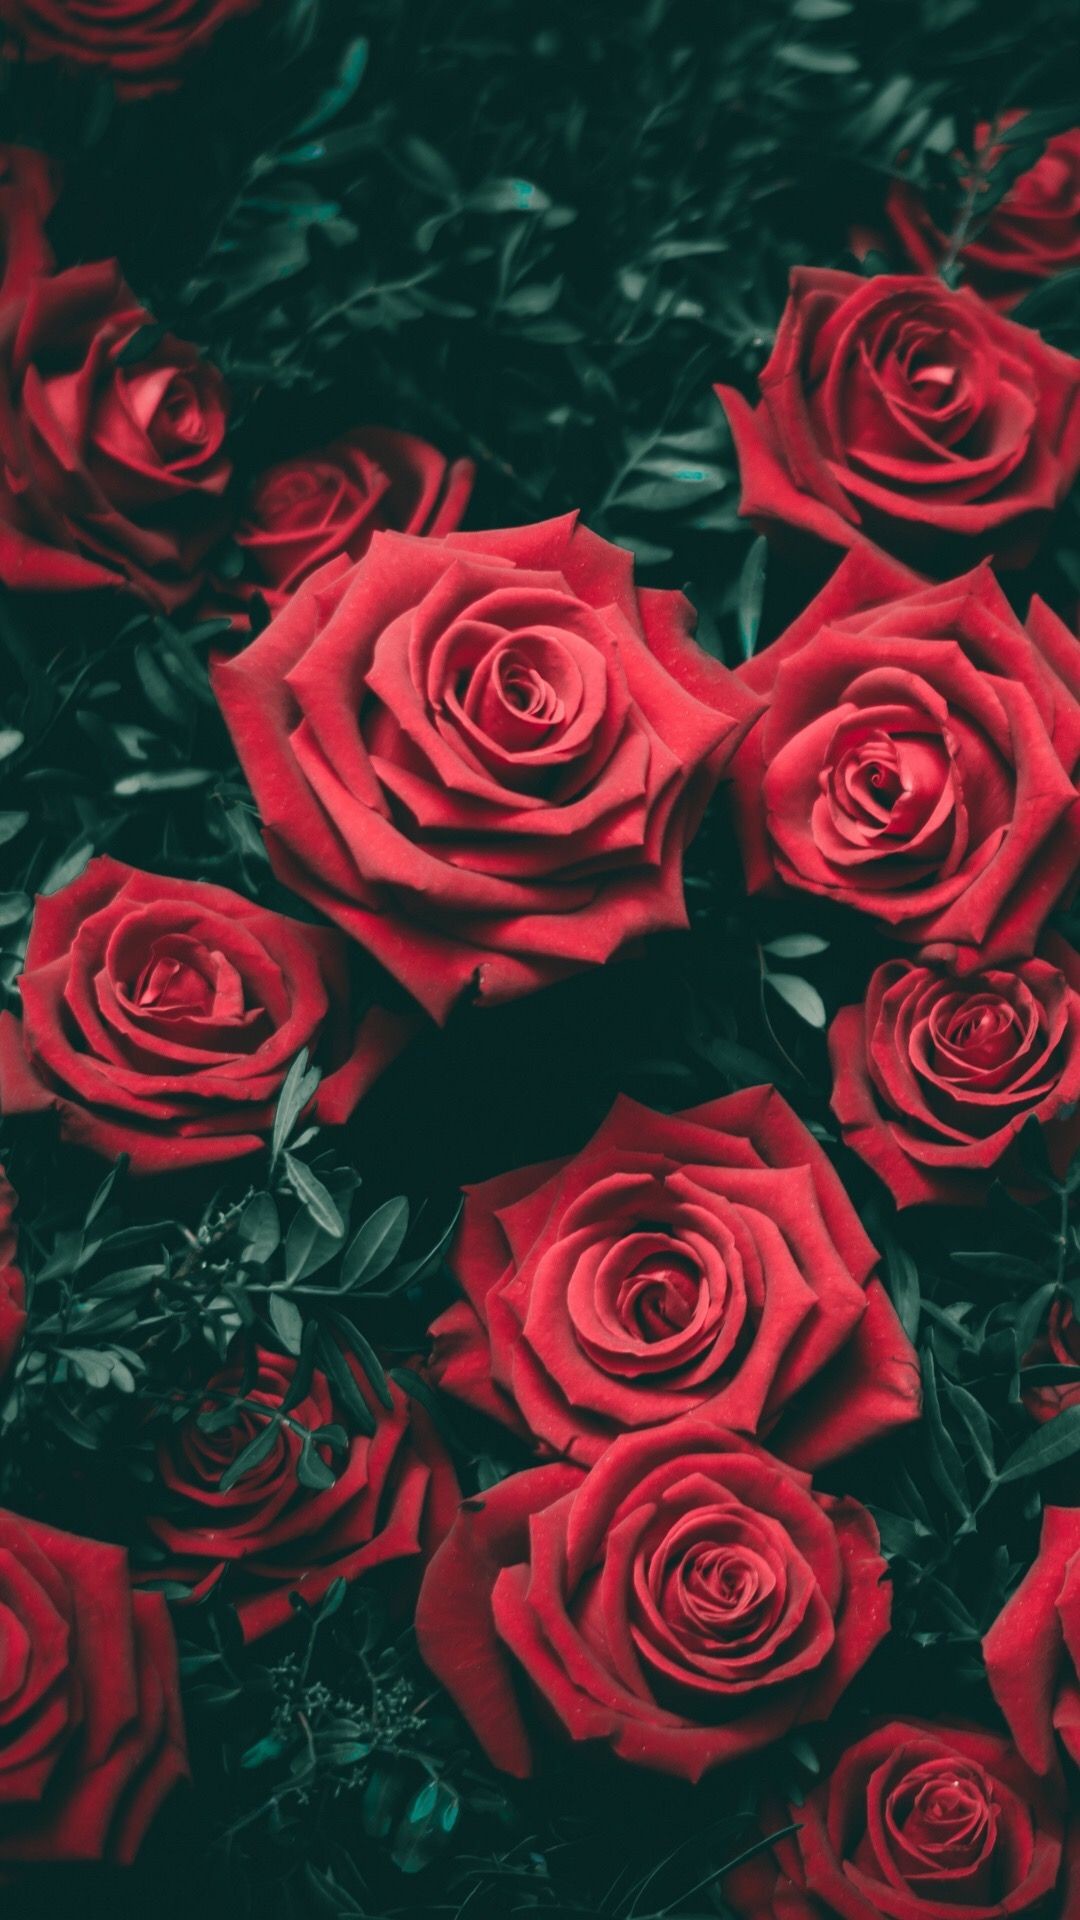 1080x1920 Red garden roses.